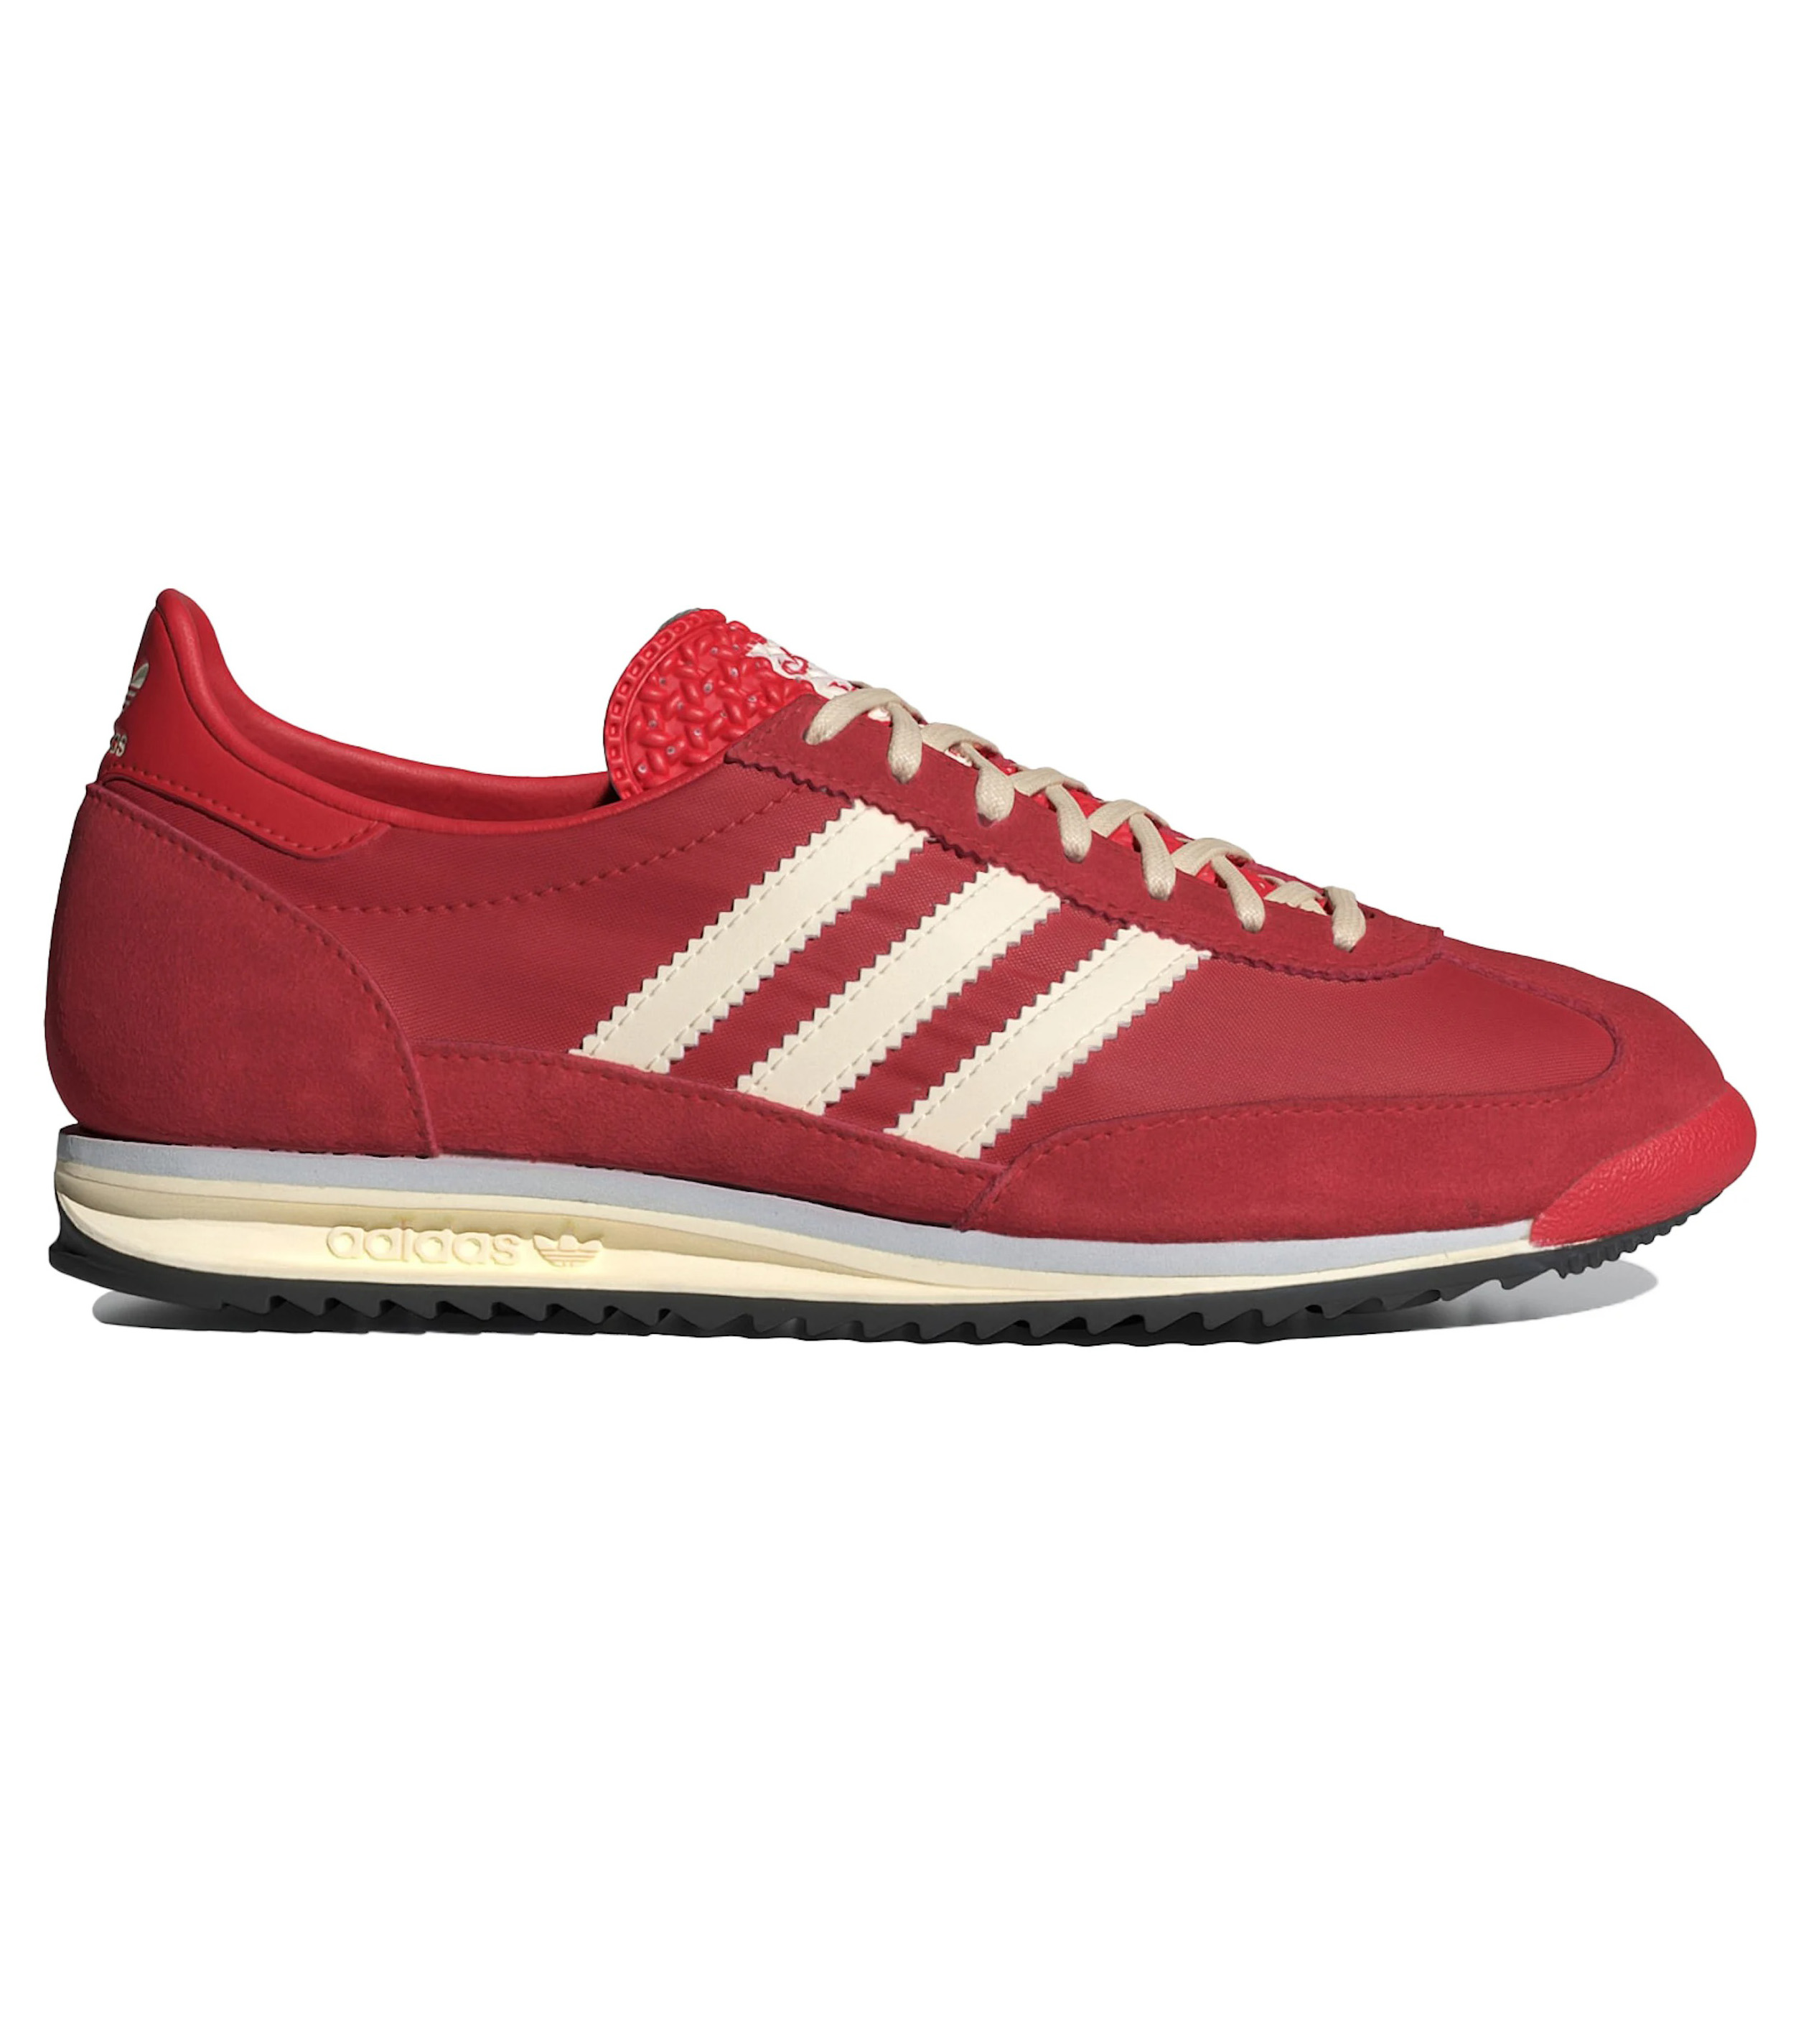 Adidas SL 72 red